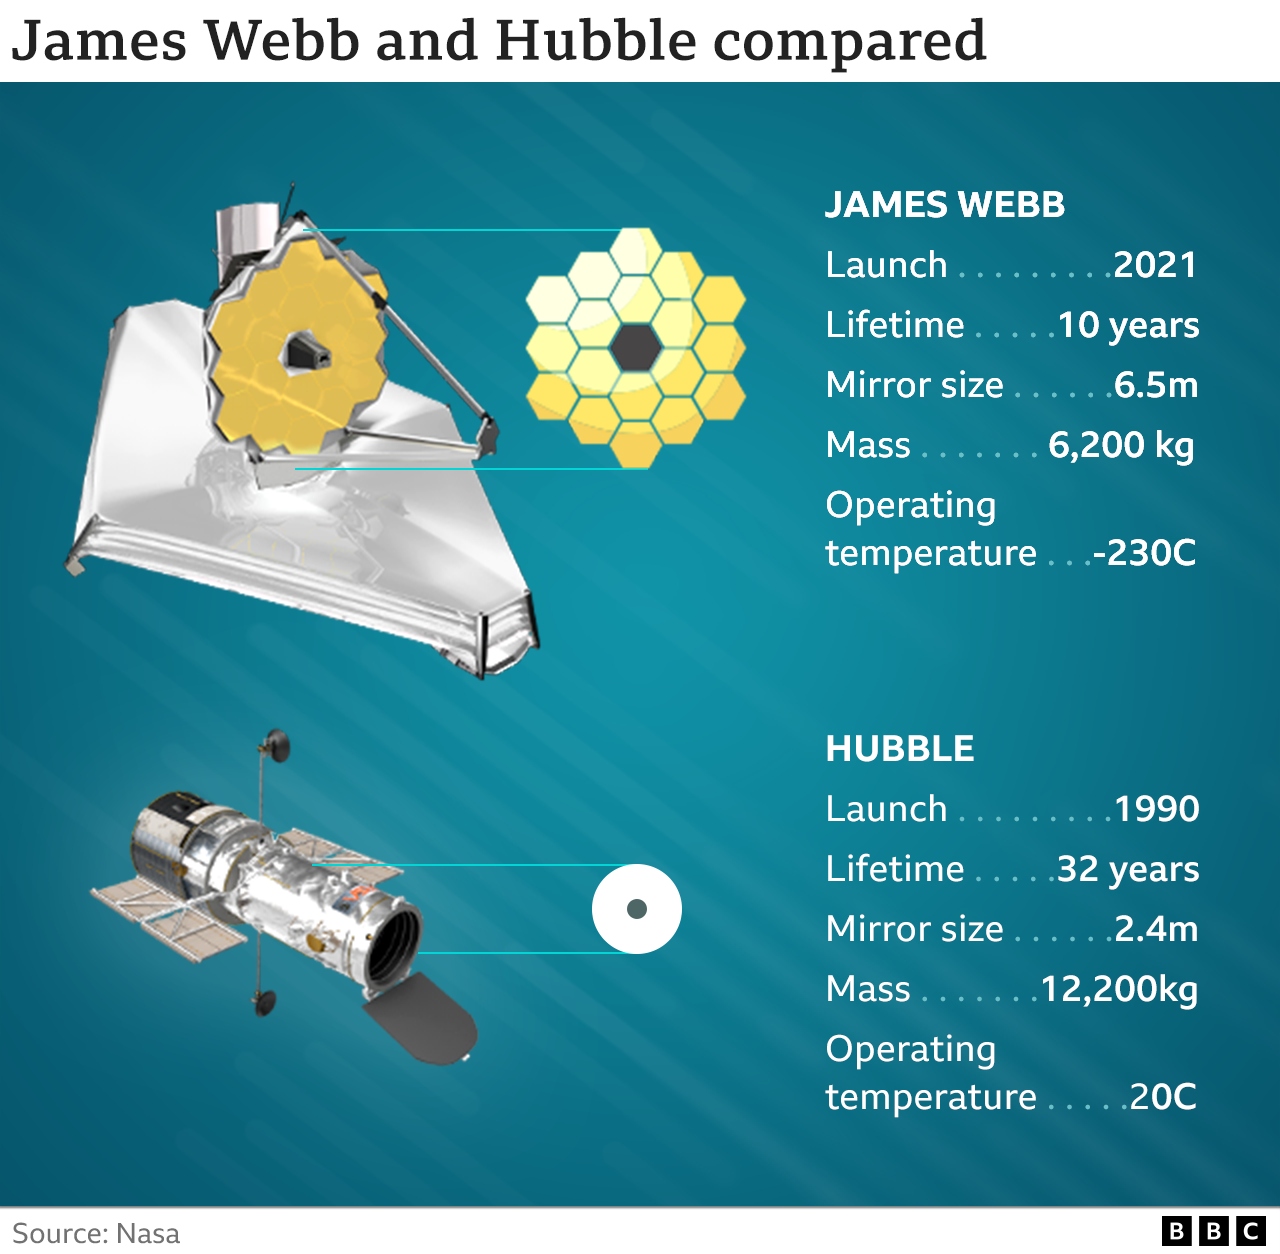 Webb and Hubble comparison